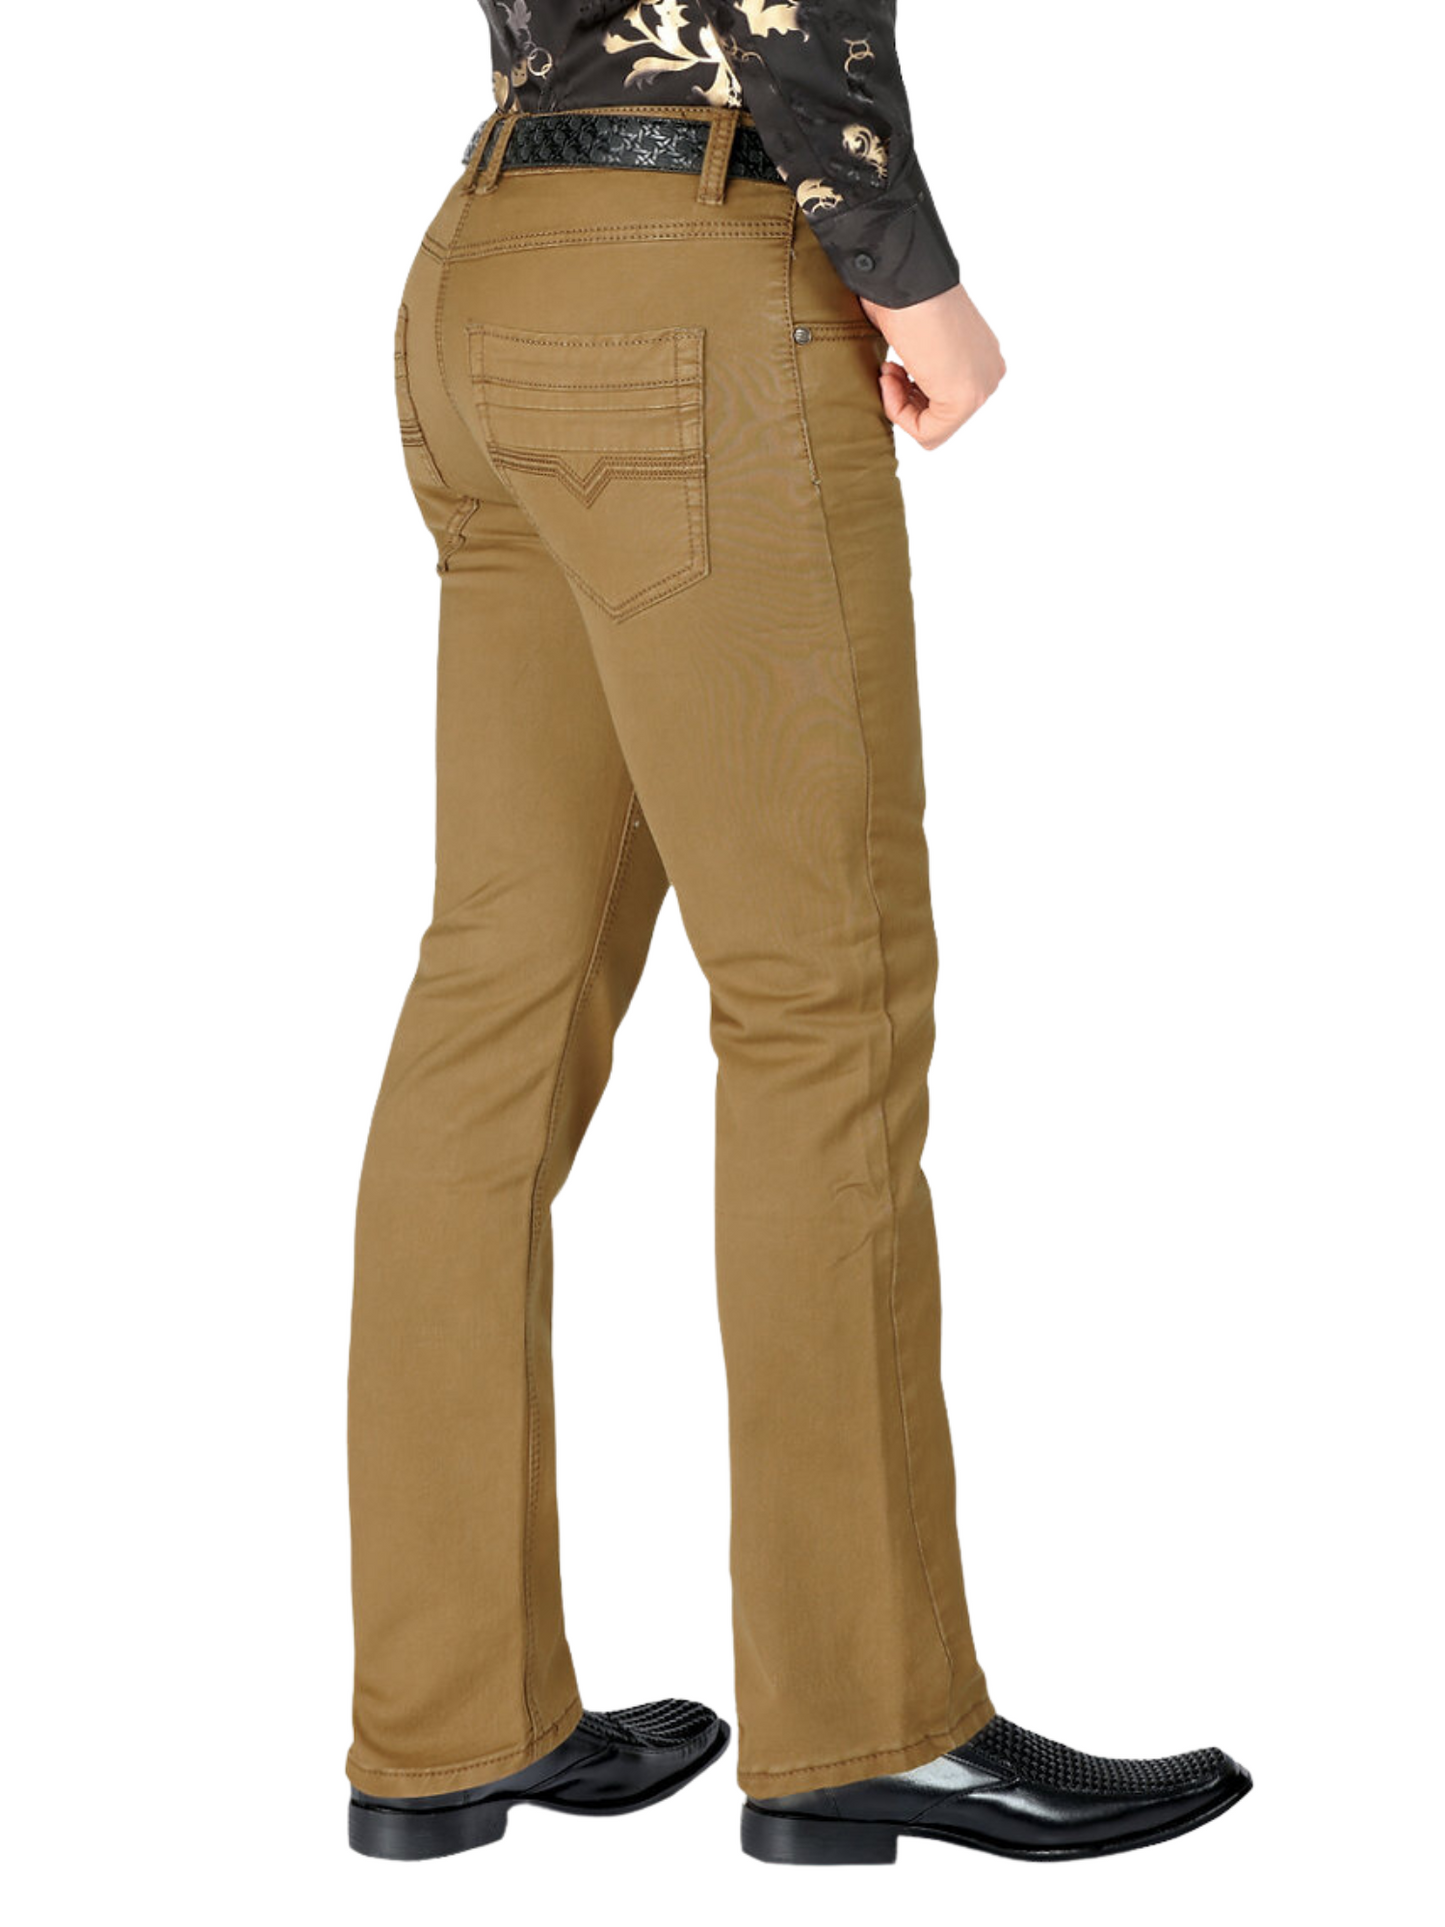 Stretch Denim Jeans for Men 'Montero' - ID: 5573 Denim Jeans Montero